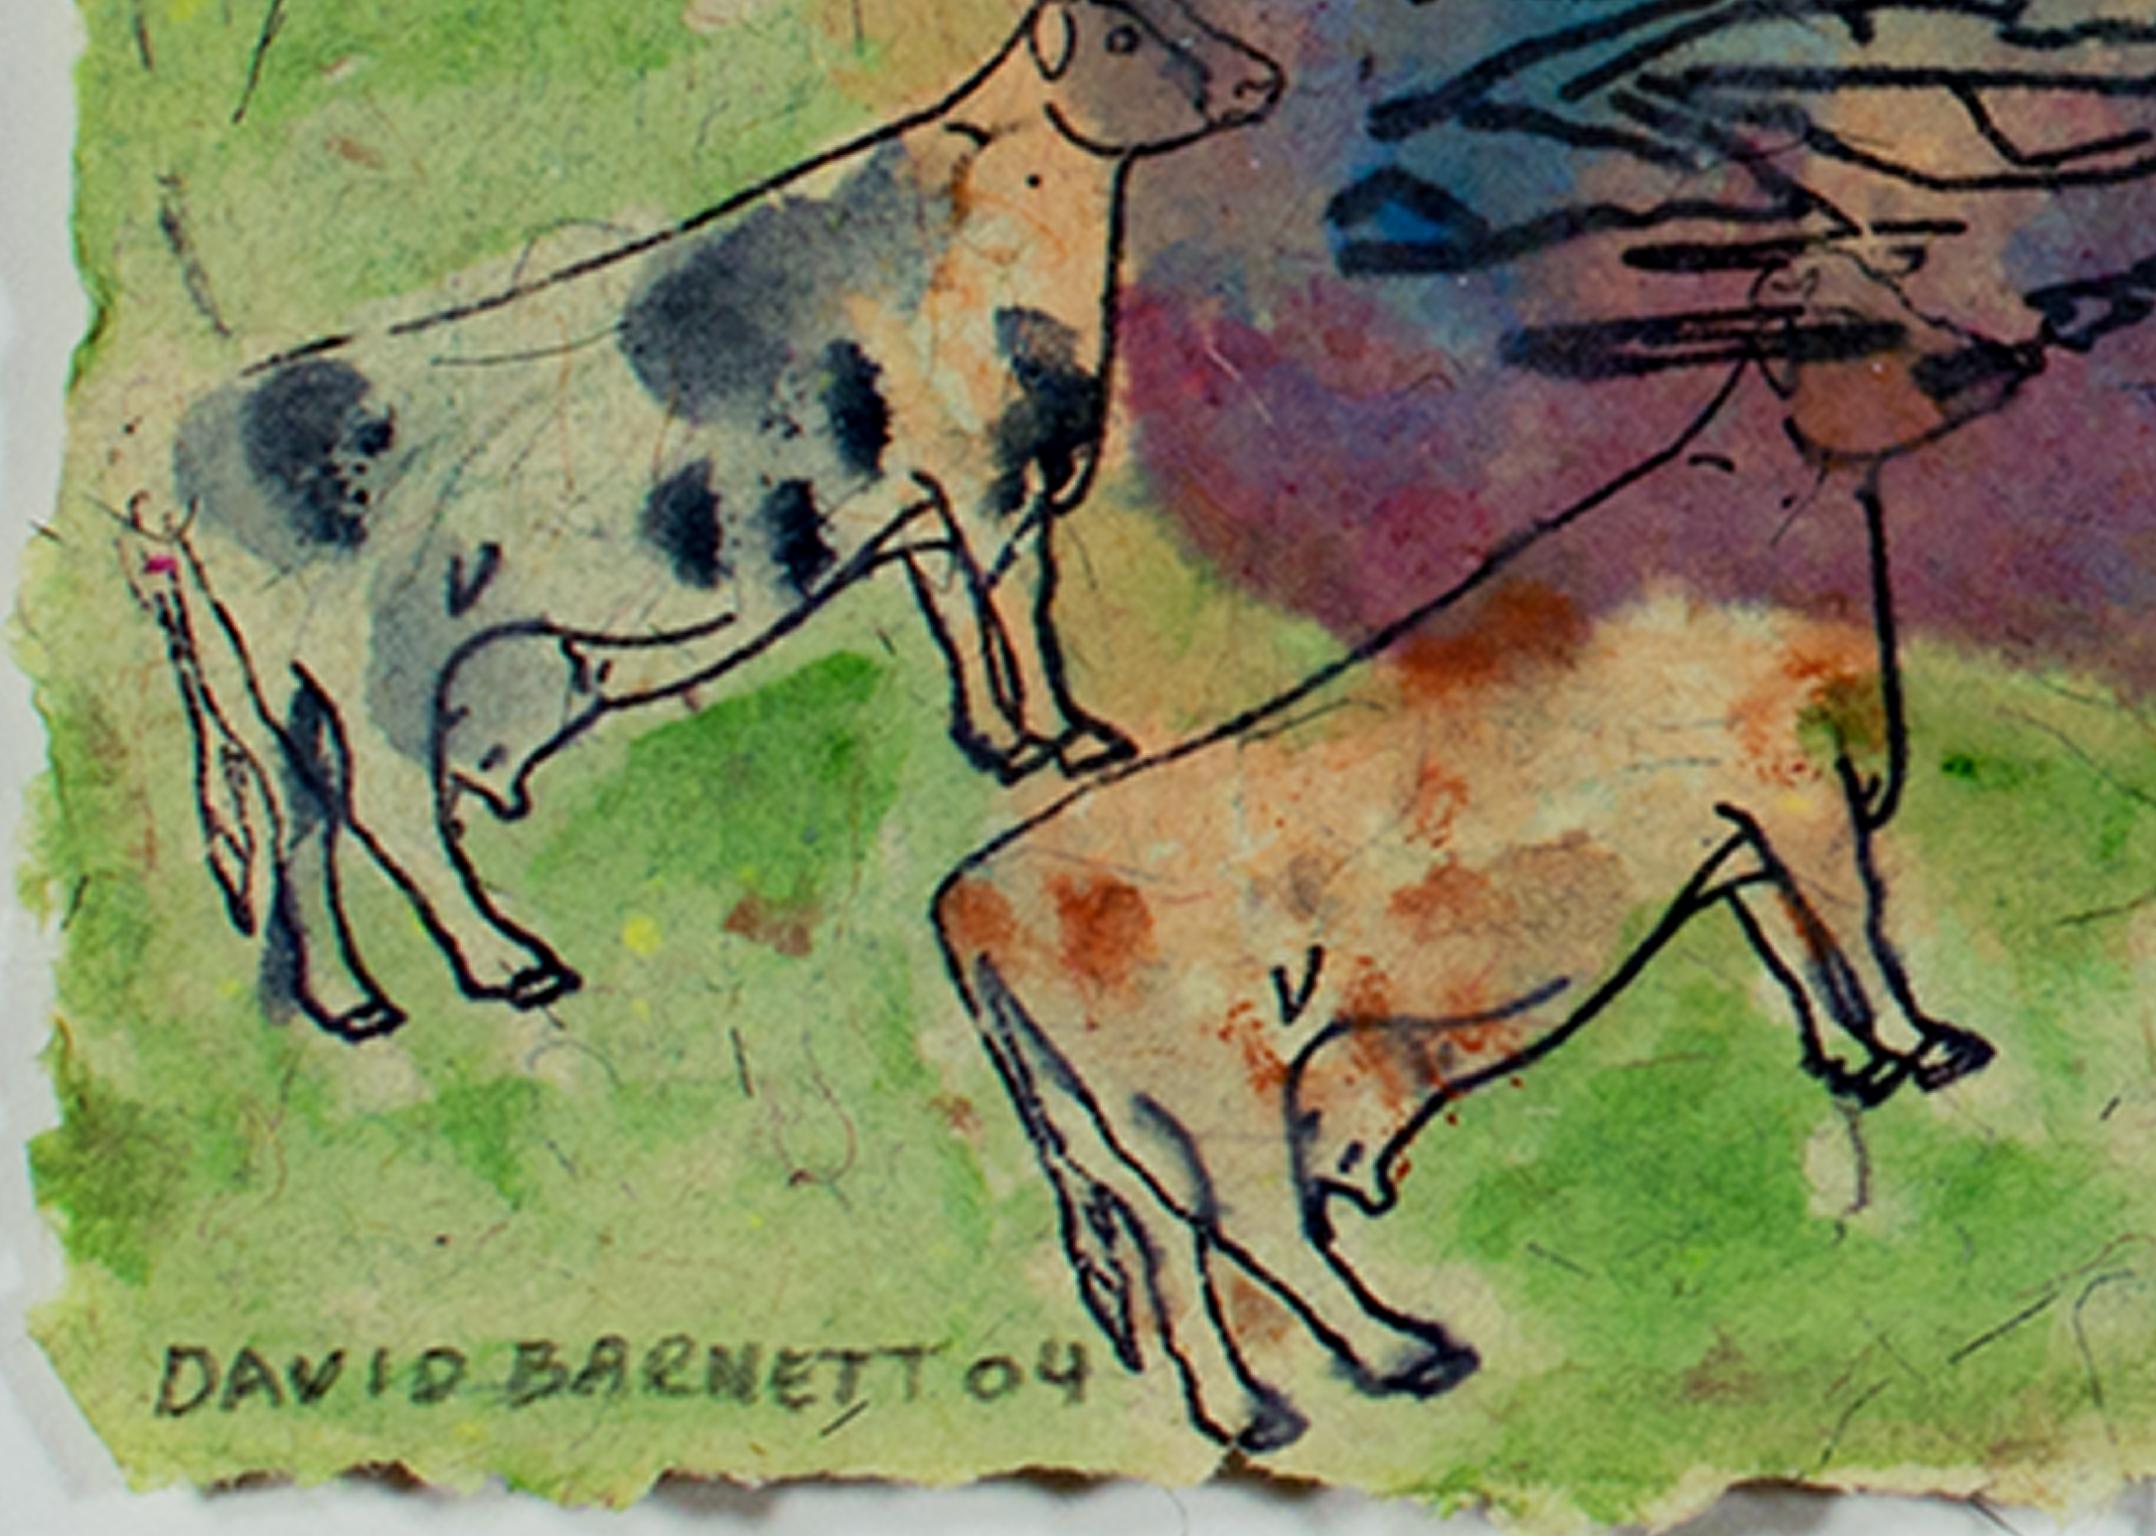 « Beaver Lake Beaver with Surround Sound Cows » signé par David et Sarah Barnett - Art de David Barnett